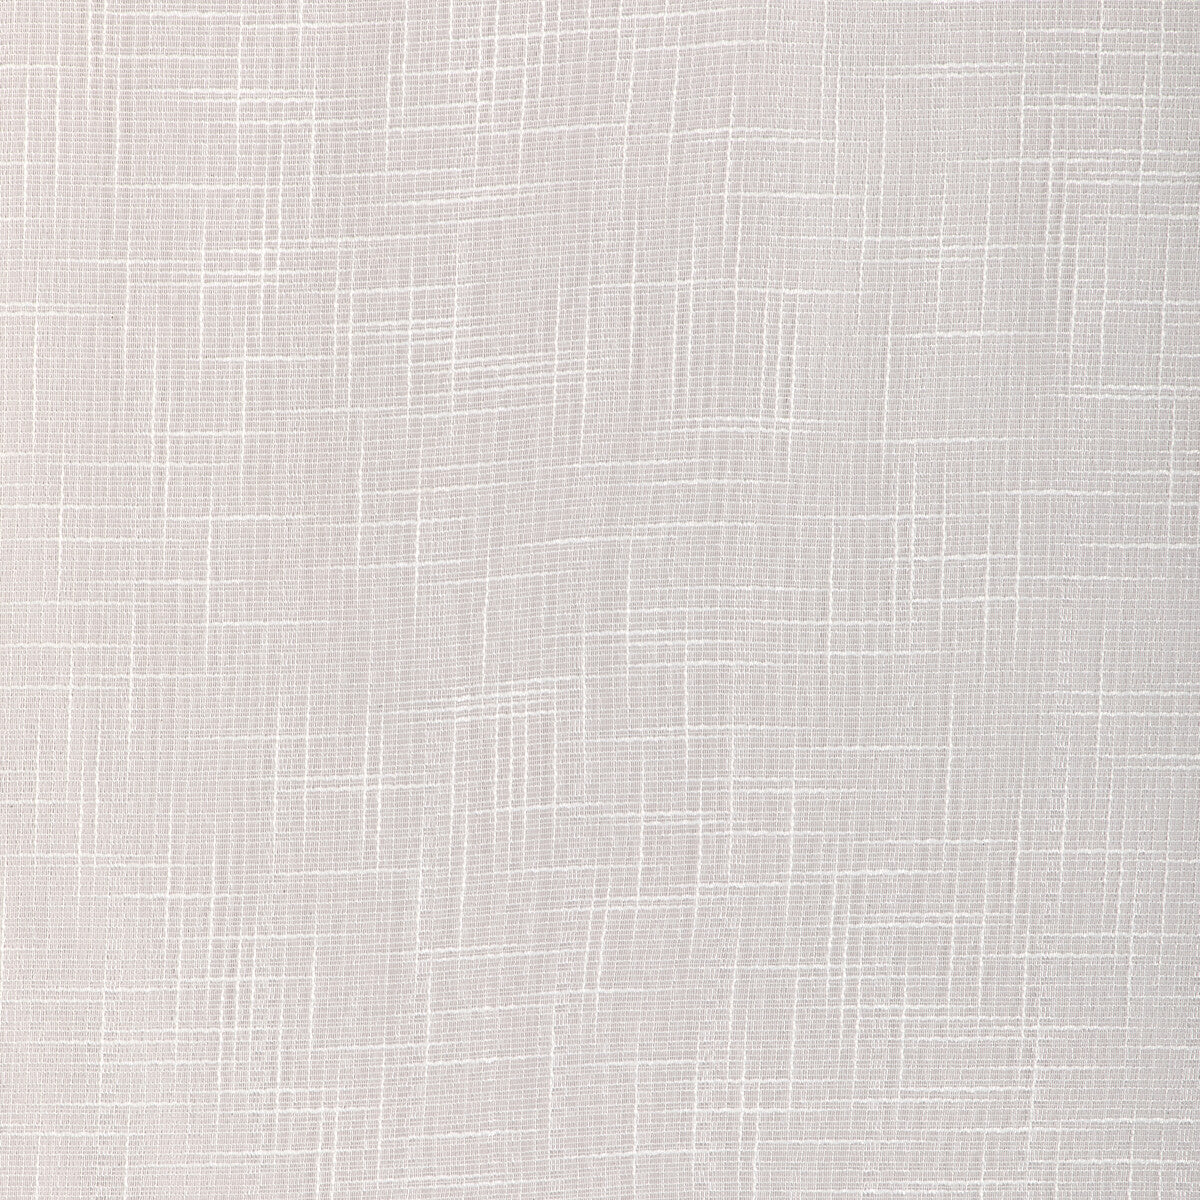 Kravet Basics fabric in 90035-1 color - pattern 90035.1.0 - by Kravet Basics in the Sheer Outlook collection